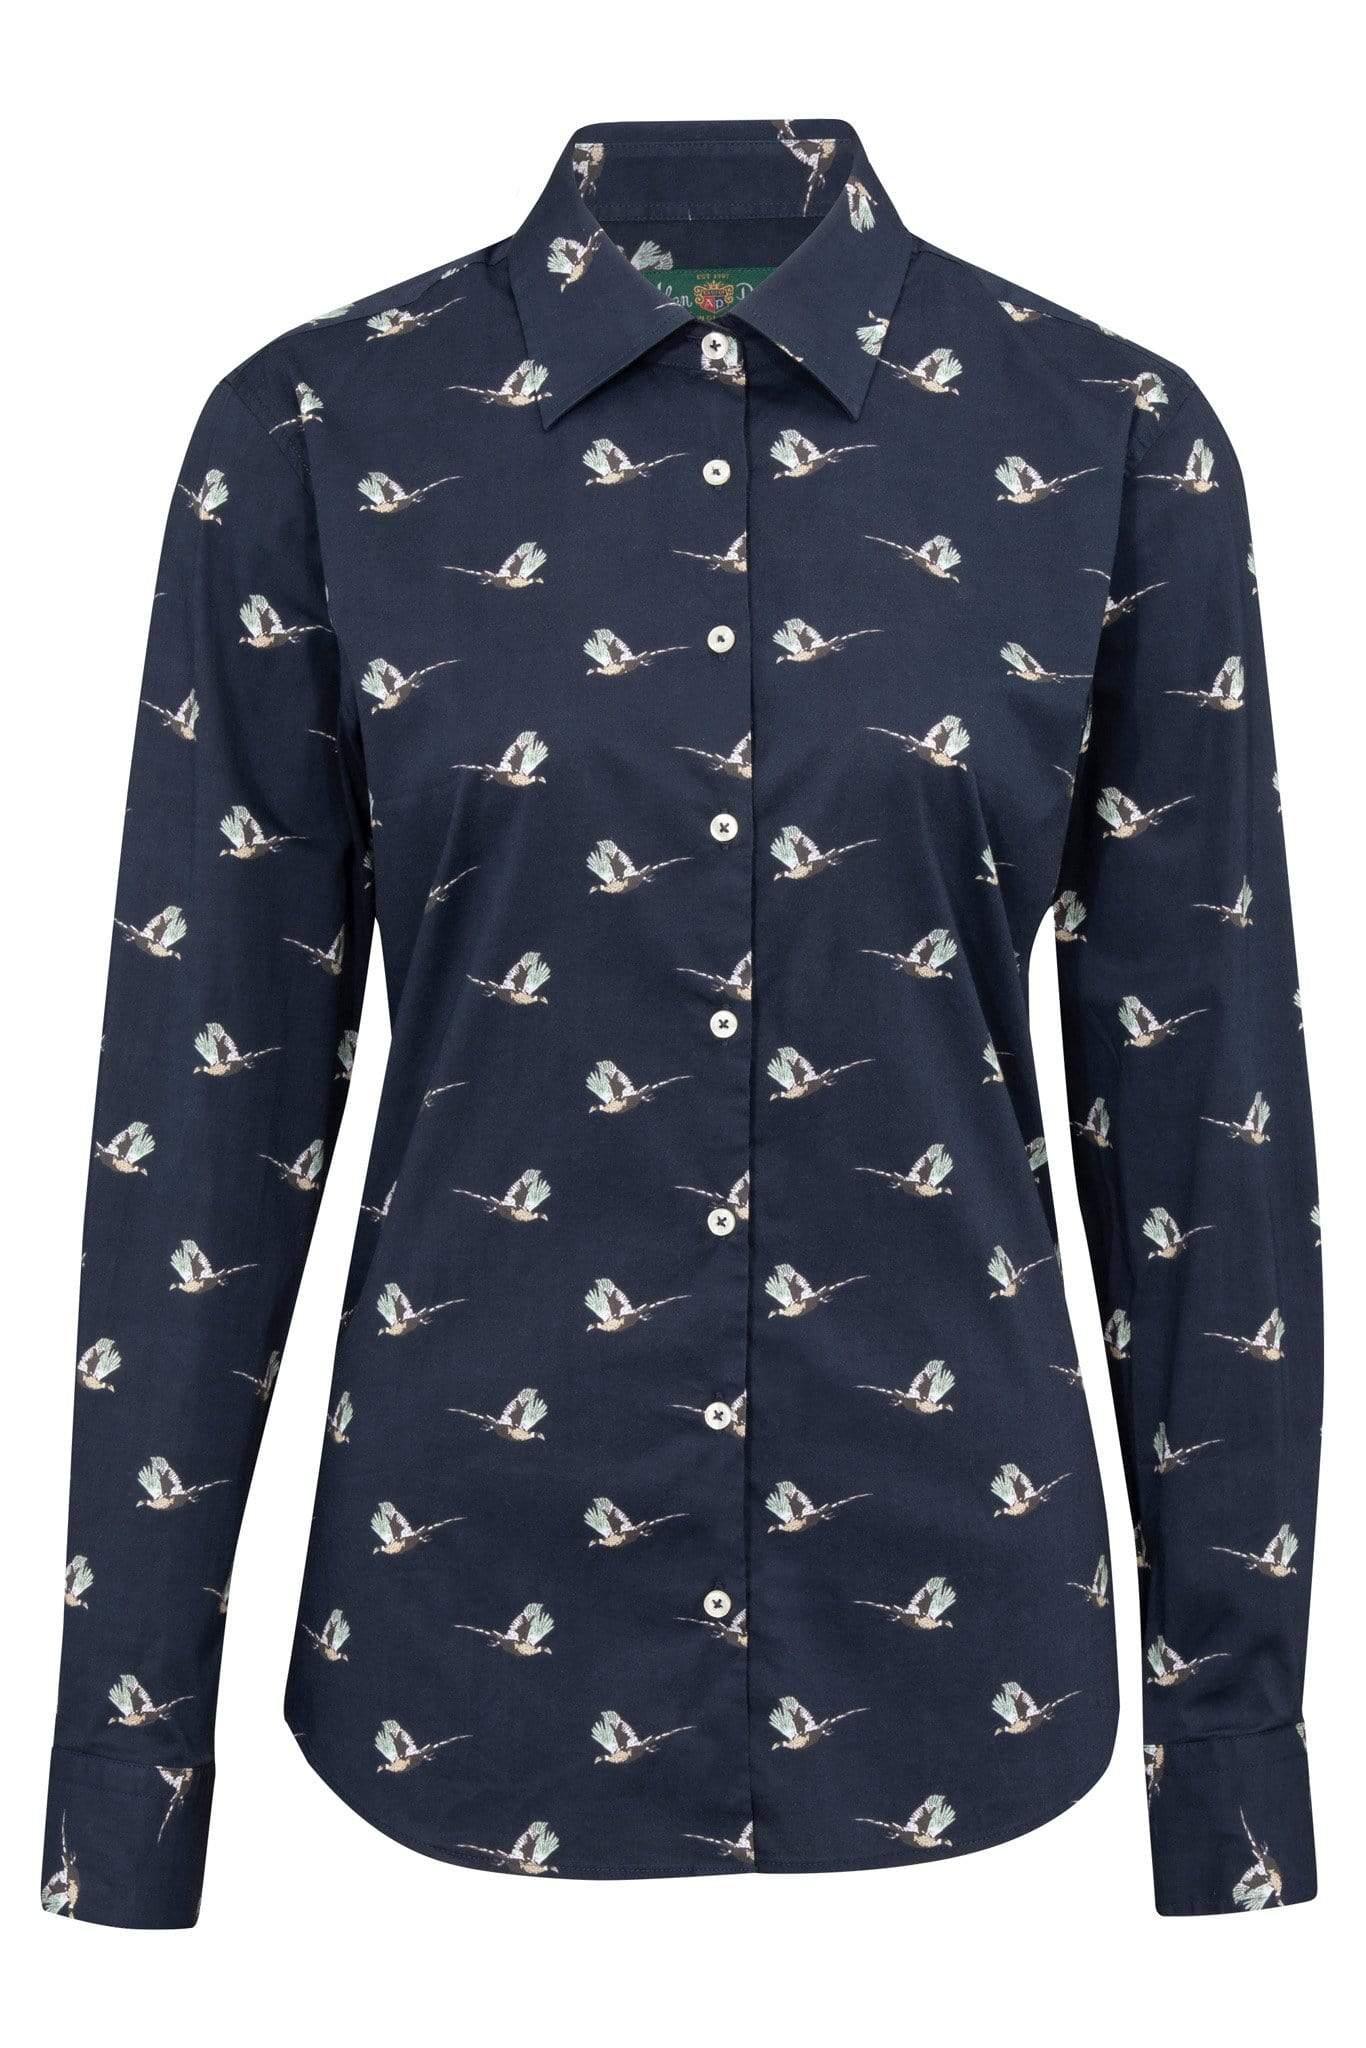 Alan Paine Women's Lawen Pheasant Shirt Navy – On The Peg Clothing